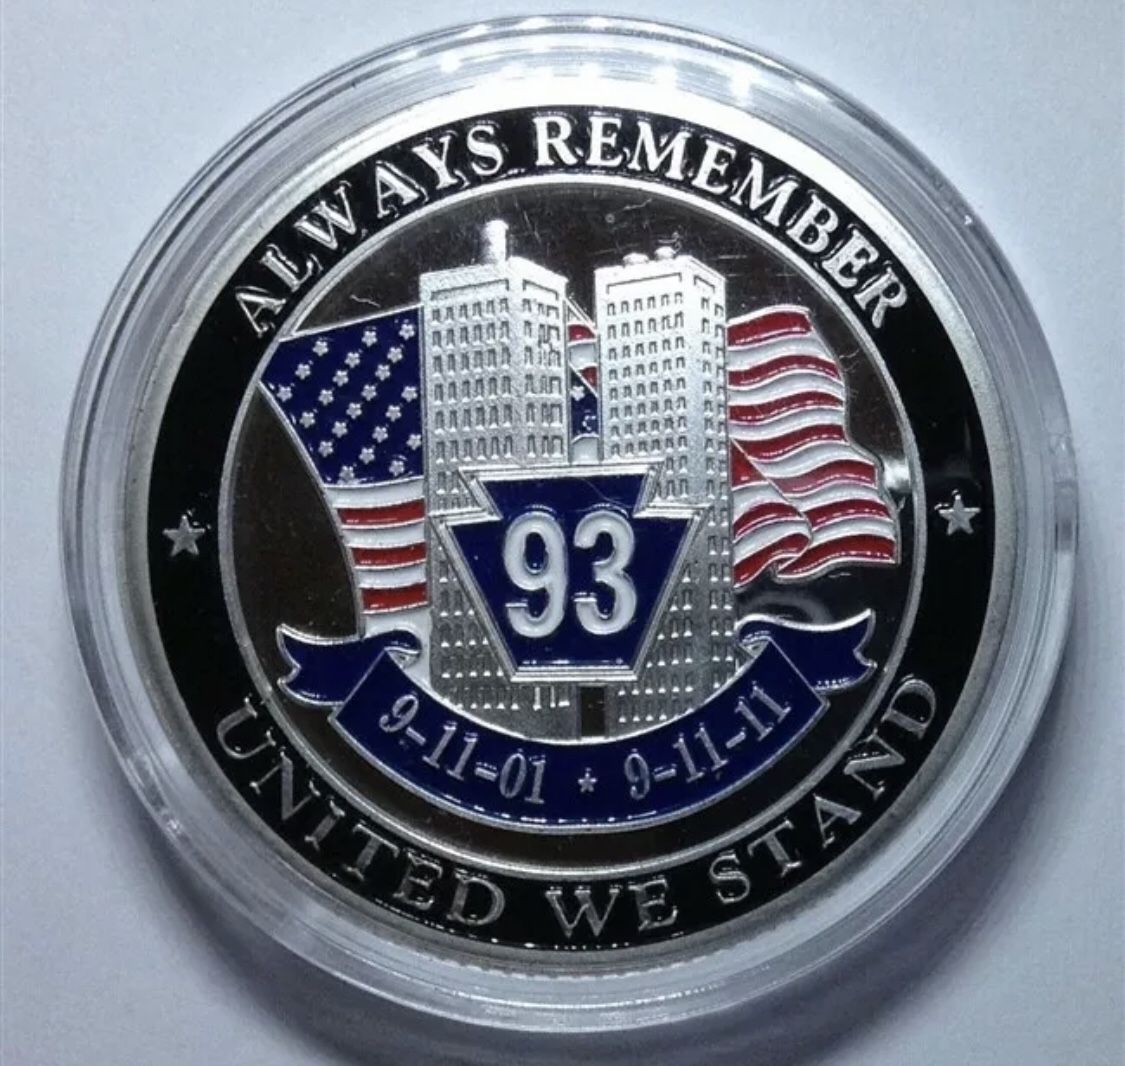 Colorized 1 Troy oz .999 Fine Silver Bullion Round, "Always Remember 9/11" Round. 911